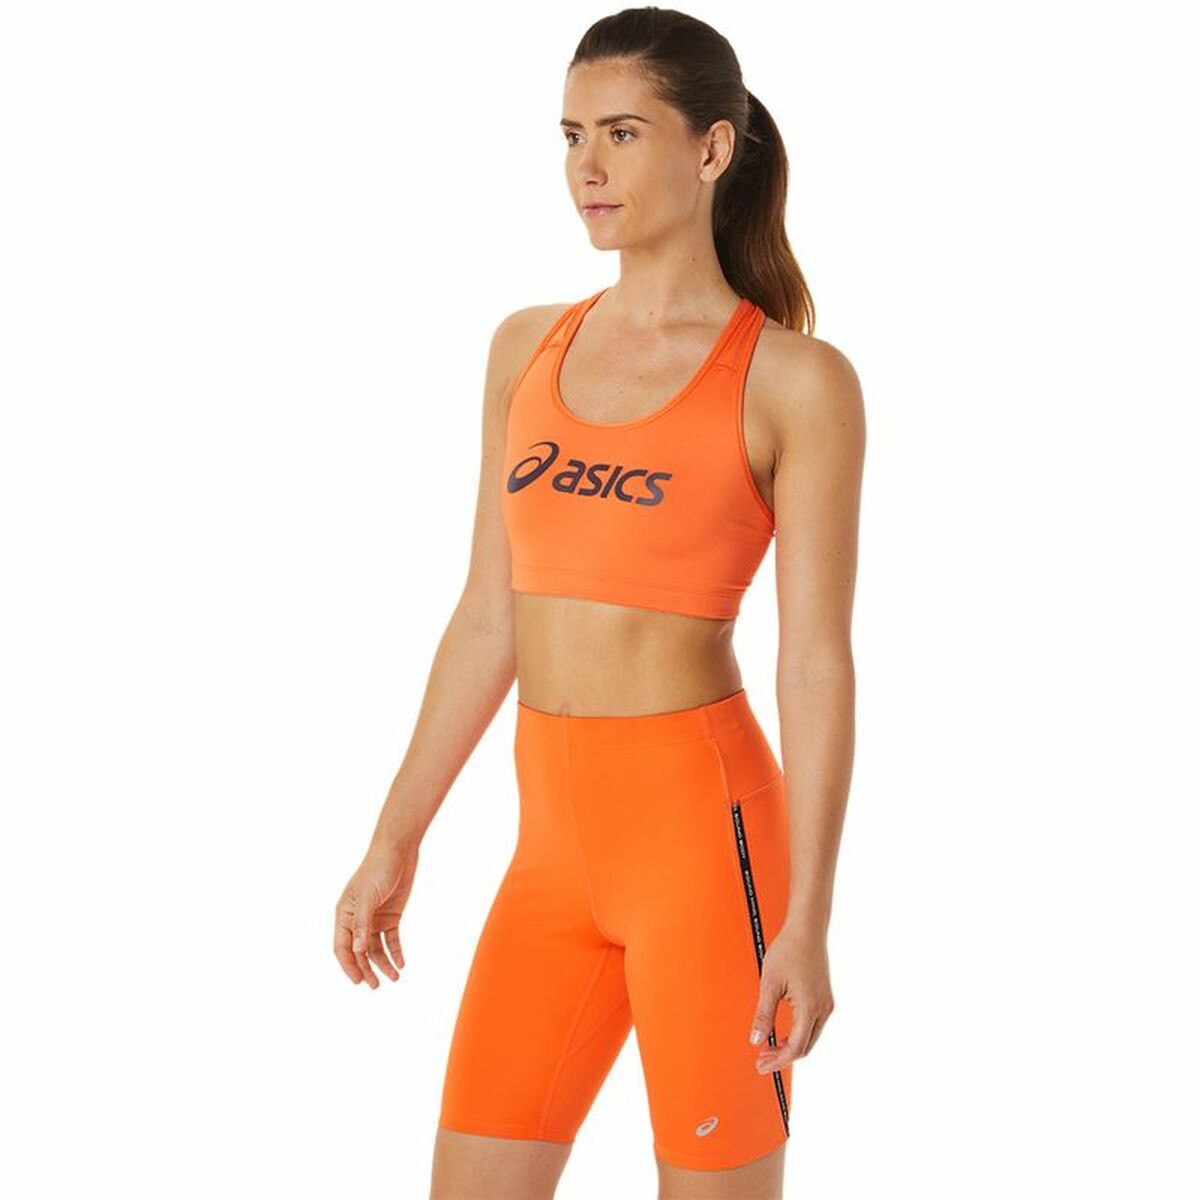 Sports Bra Asics Core Orange